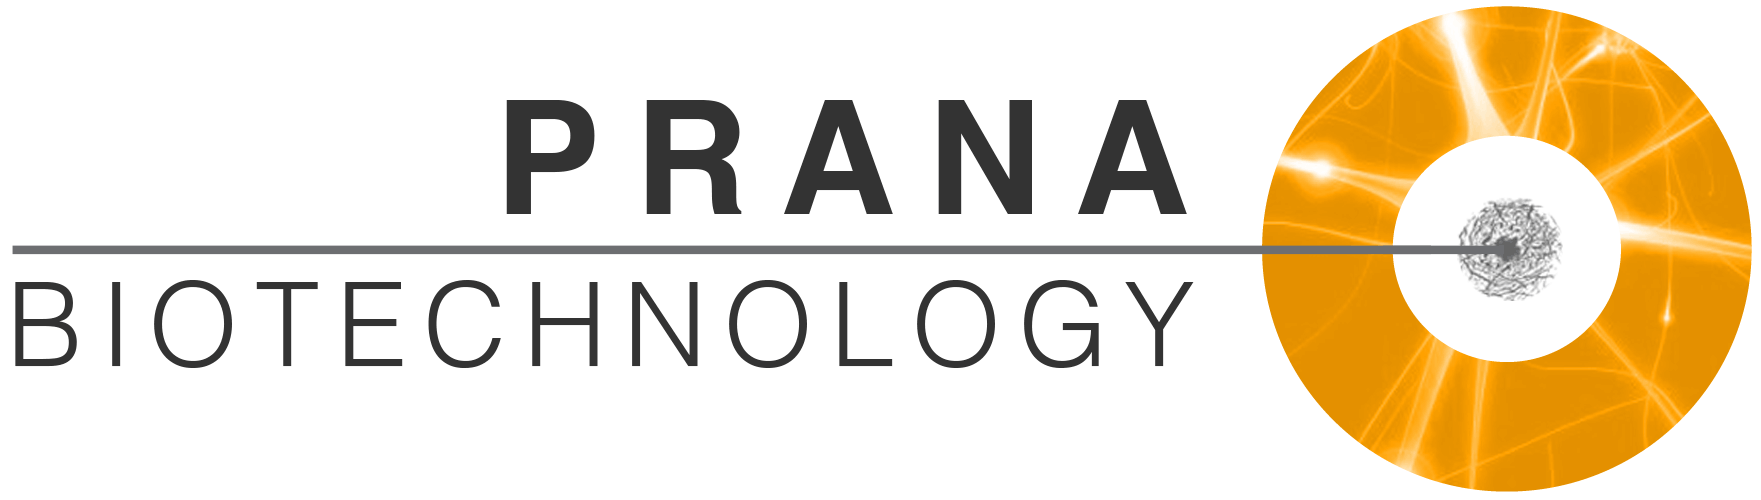 Prana Logo - Prana Biotechnology - A leader in the development of drugs for ...